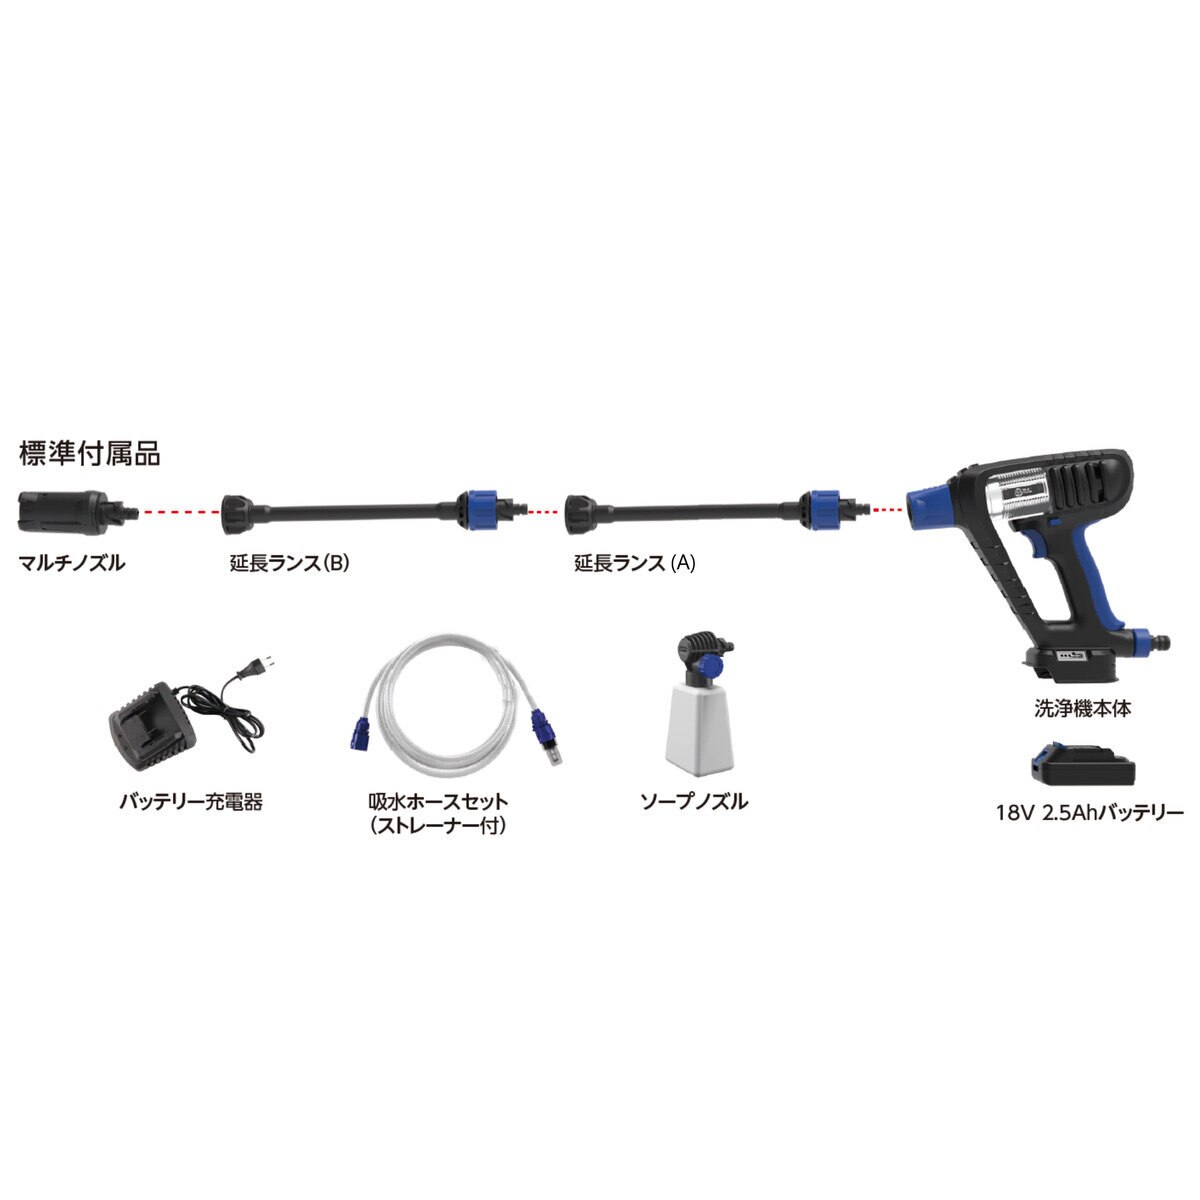 AR コードレス高圧洗浄機 18V BC250 | Costco Japan